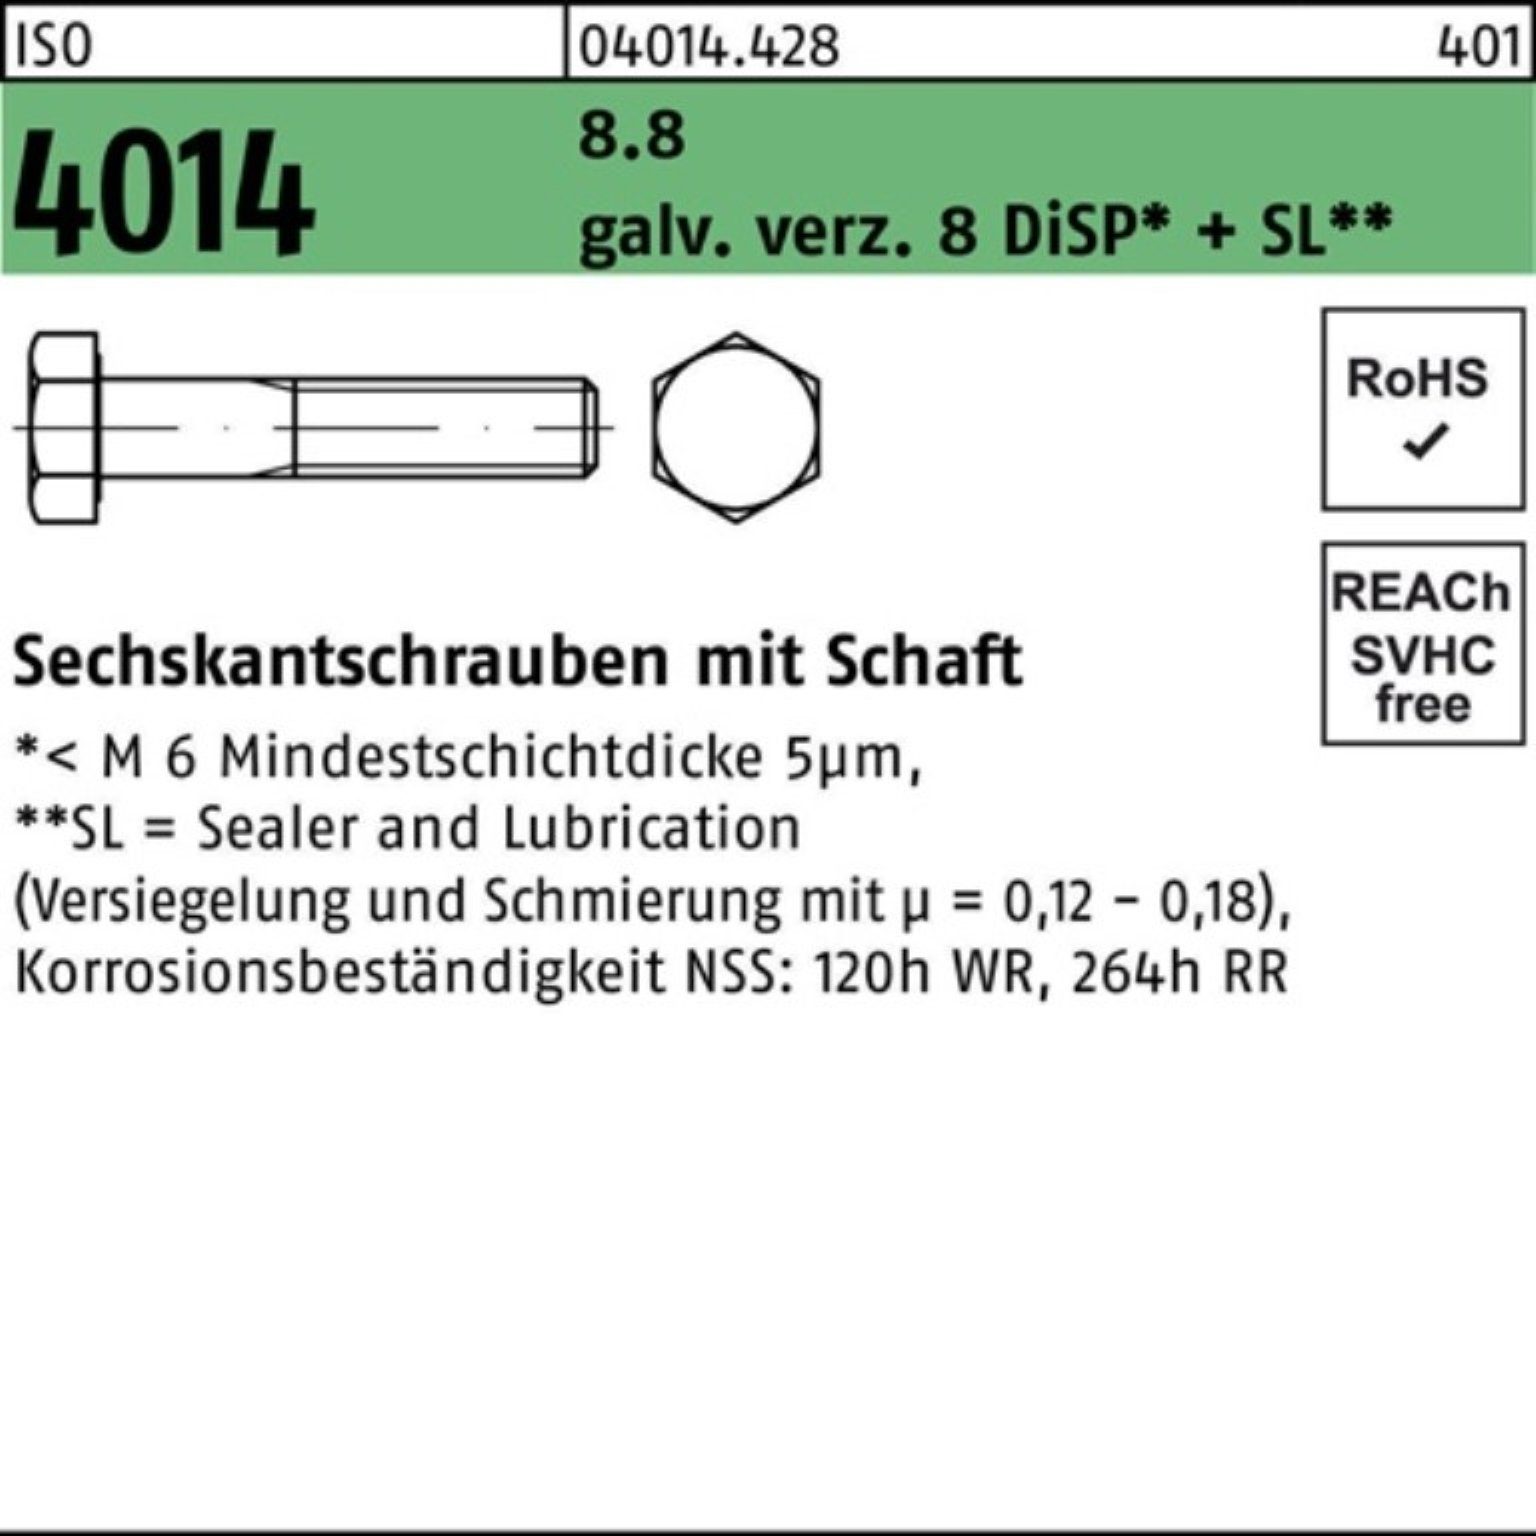 Bufab Sechskantschraube 100er Pack Sechskantschraube ISO 4014 Schaft M20x220 8.8 galv.verz. 8 | Schrauben